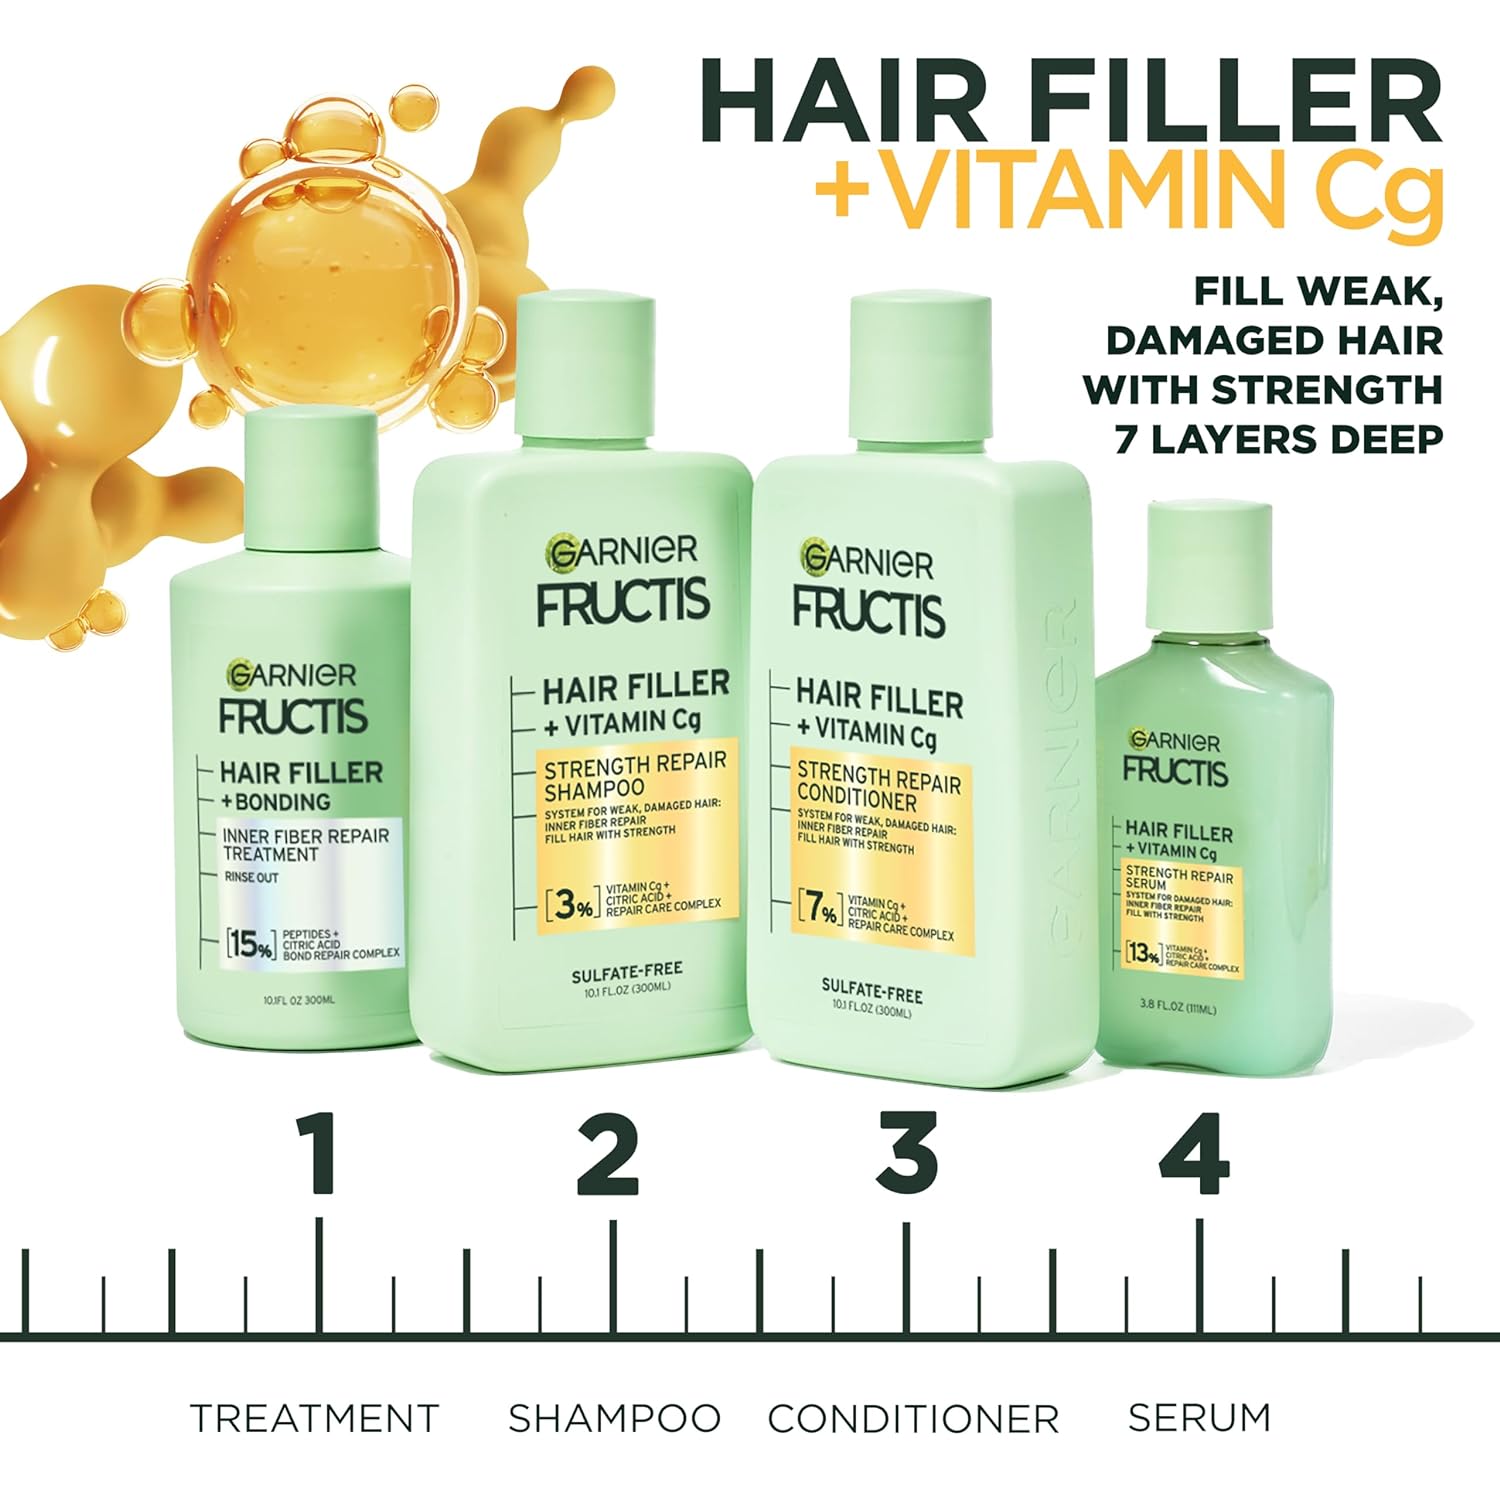 Garnier Fructis Hair Filler Strength Repair Serum with Vitamin Cg, 3.8 FL OZ, 1 Count : Beauty & Personal Care